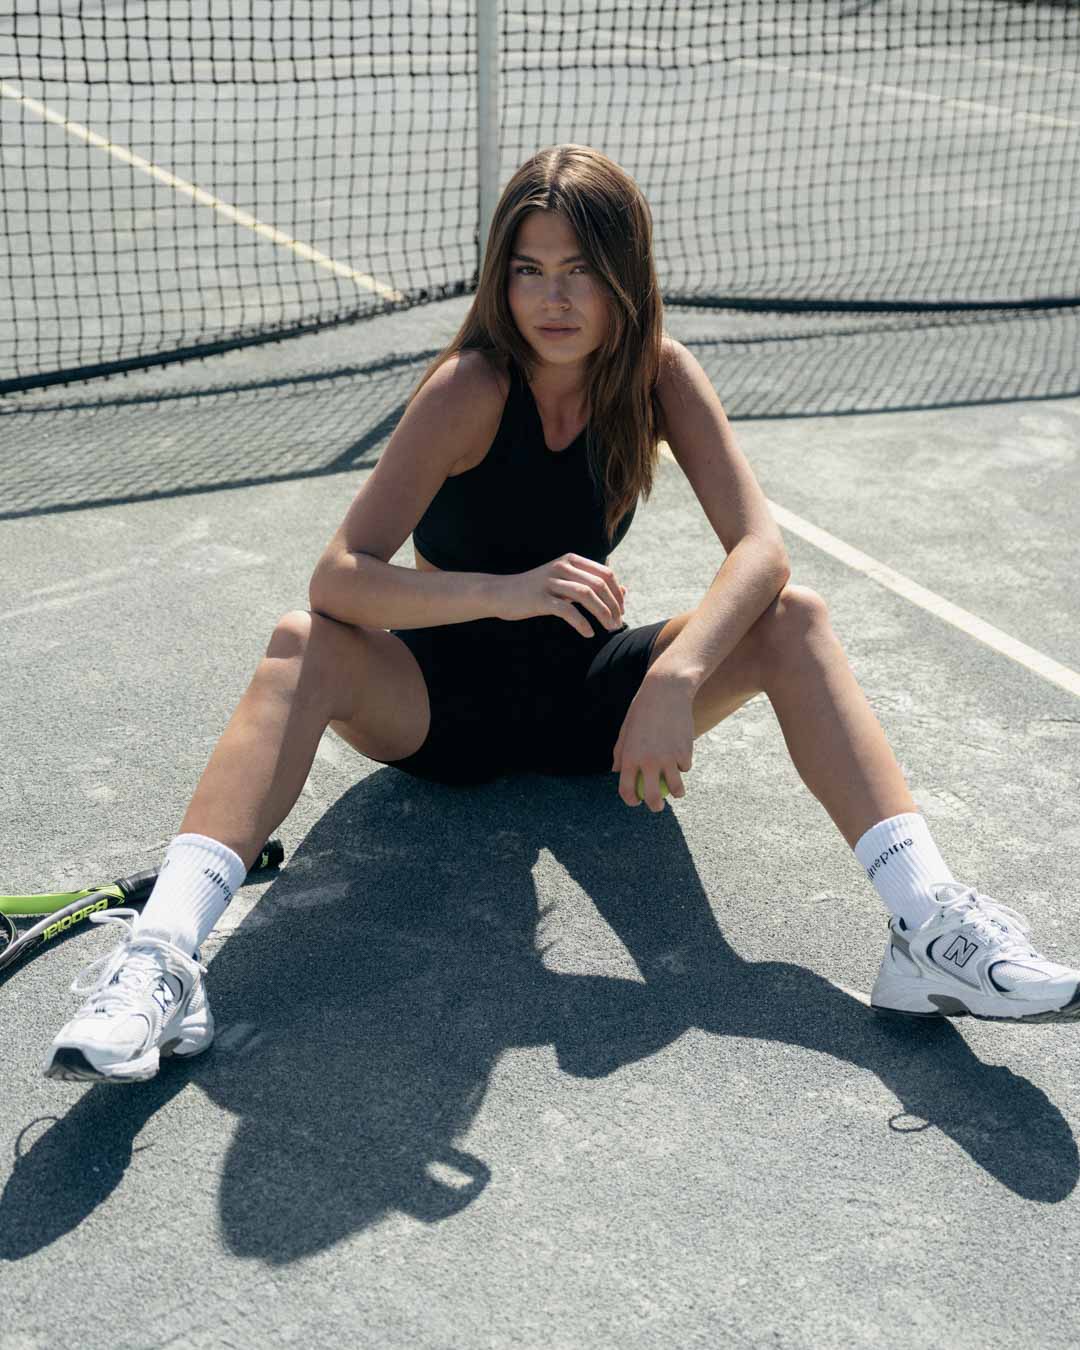 Woman sitting on a tennis court legs spread in biker shorts